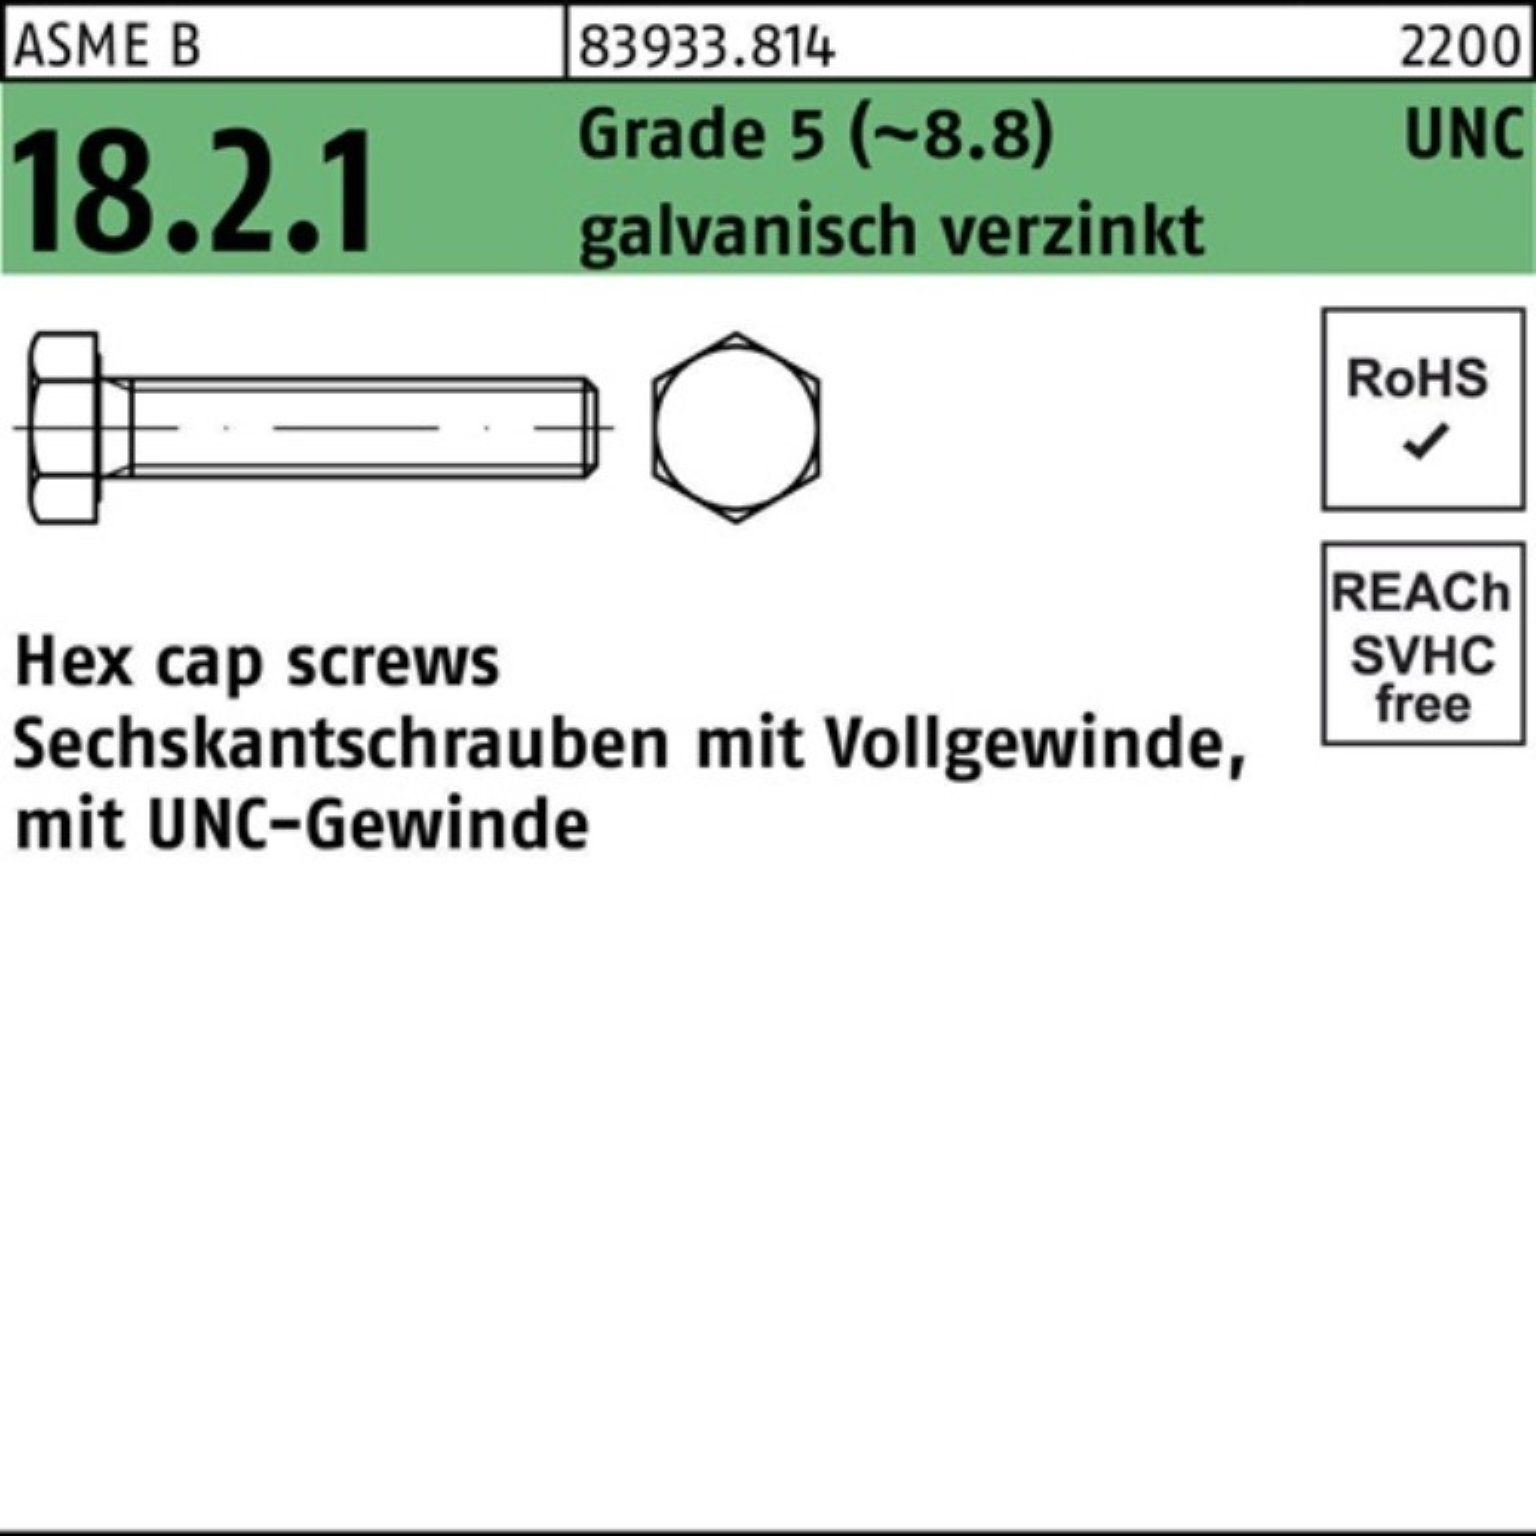 Sechskantschraube VG Pack UNC Sechskantschraube Reyher 5 galv 5/16x1 100er R 83933 (8.8) Grade